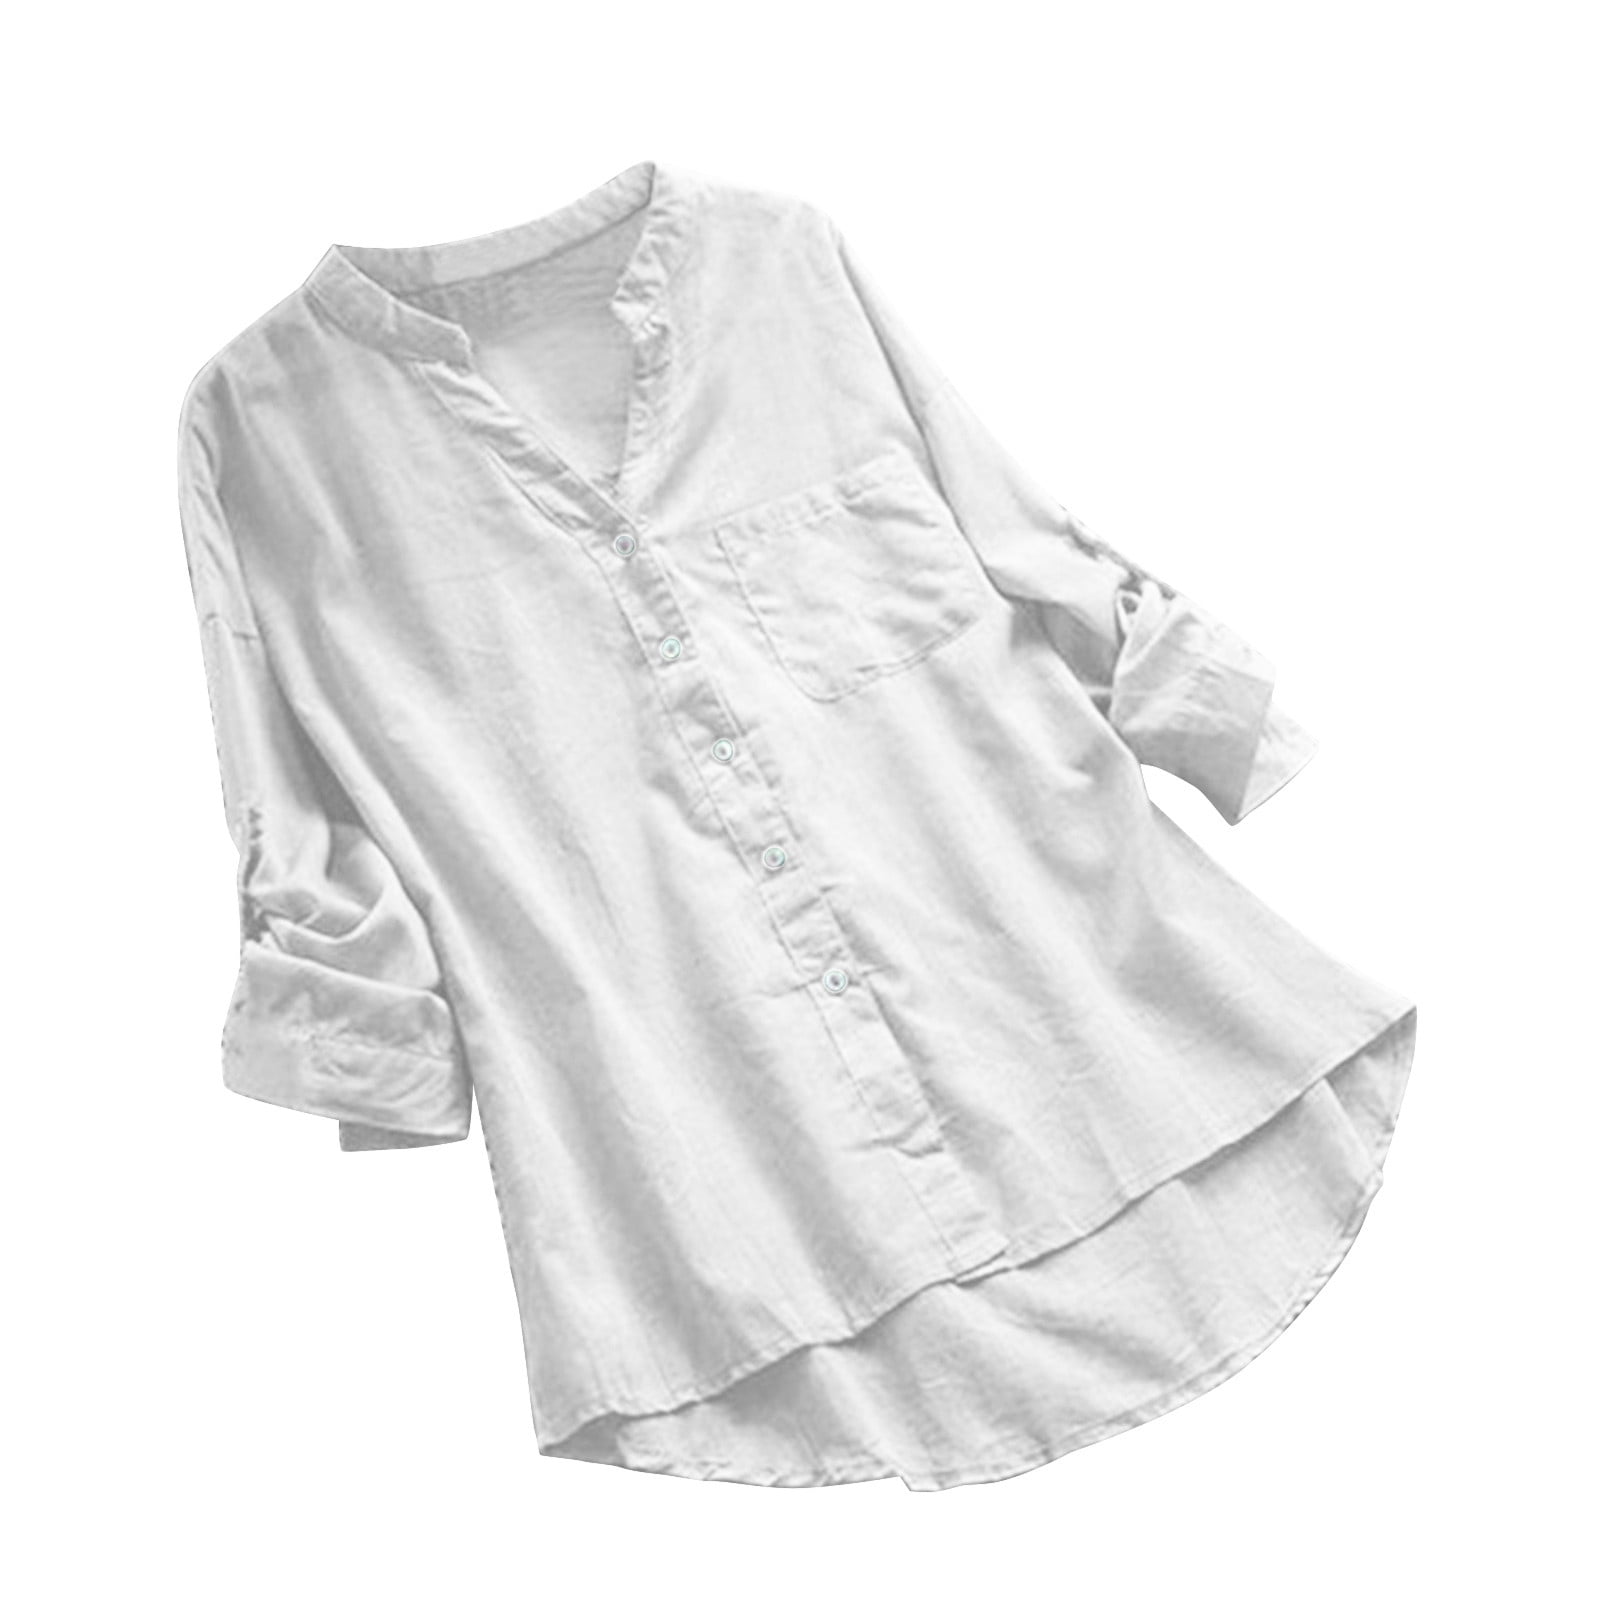 Women's Casual Cotton Linen Blouses Tops Long Sleeve Button Down Shirts 